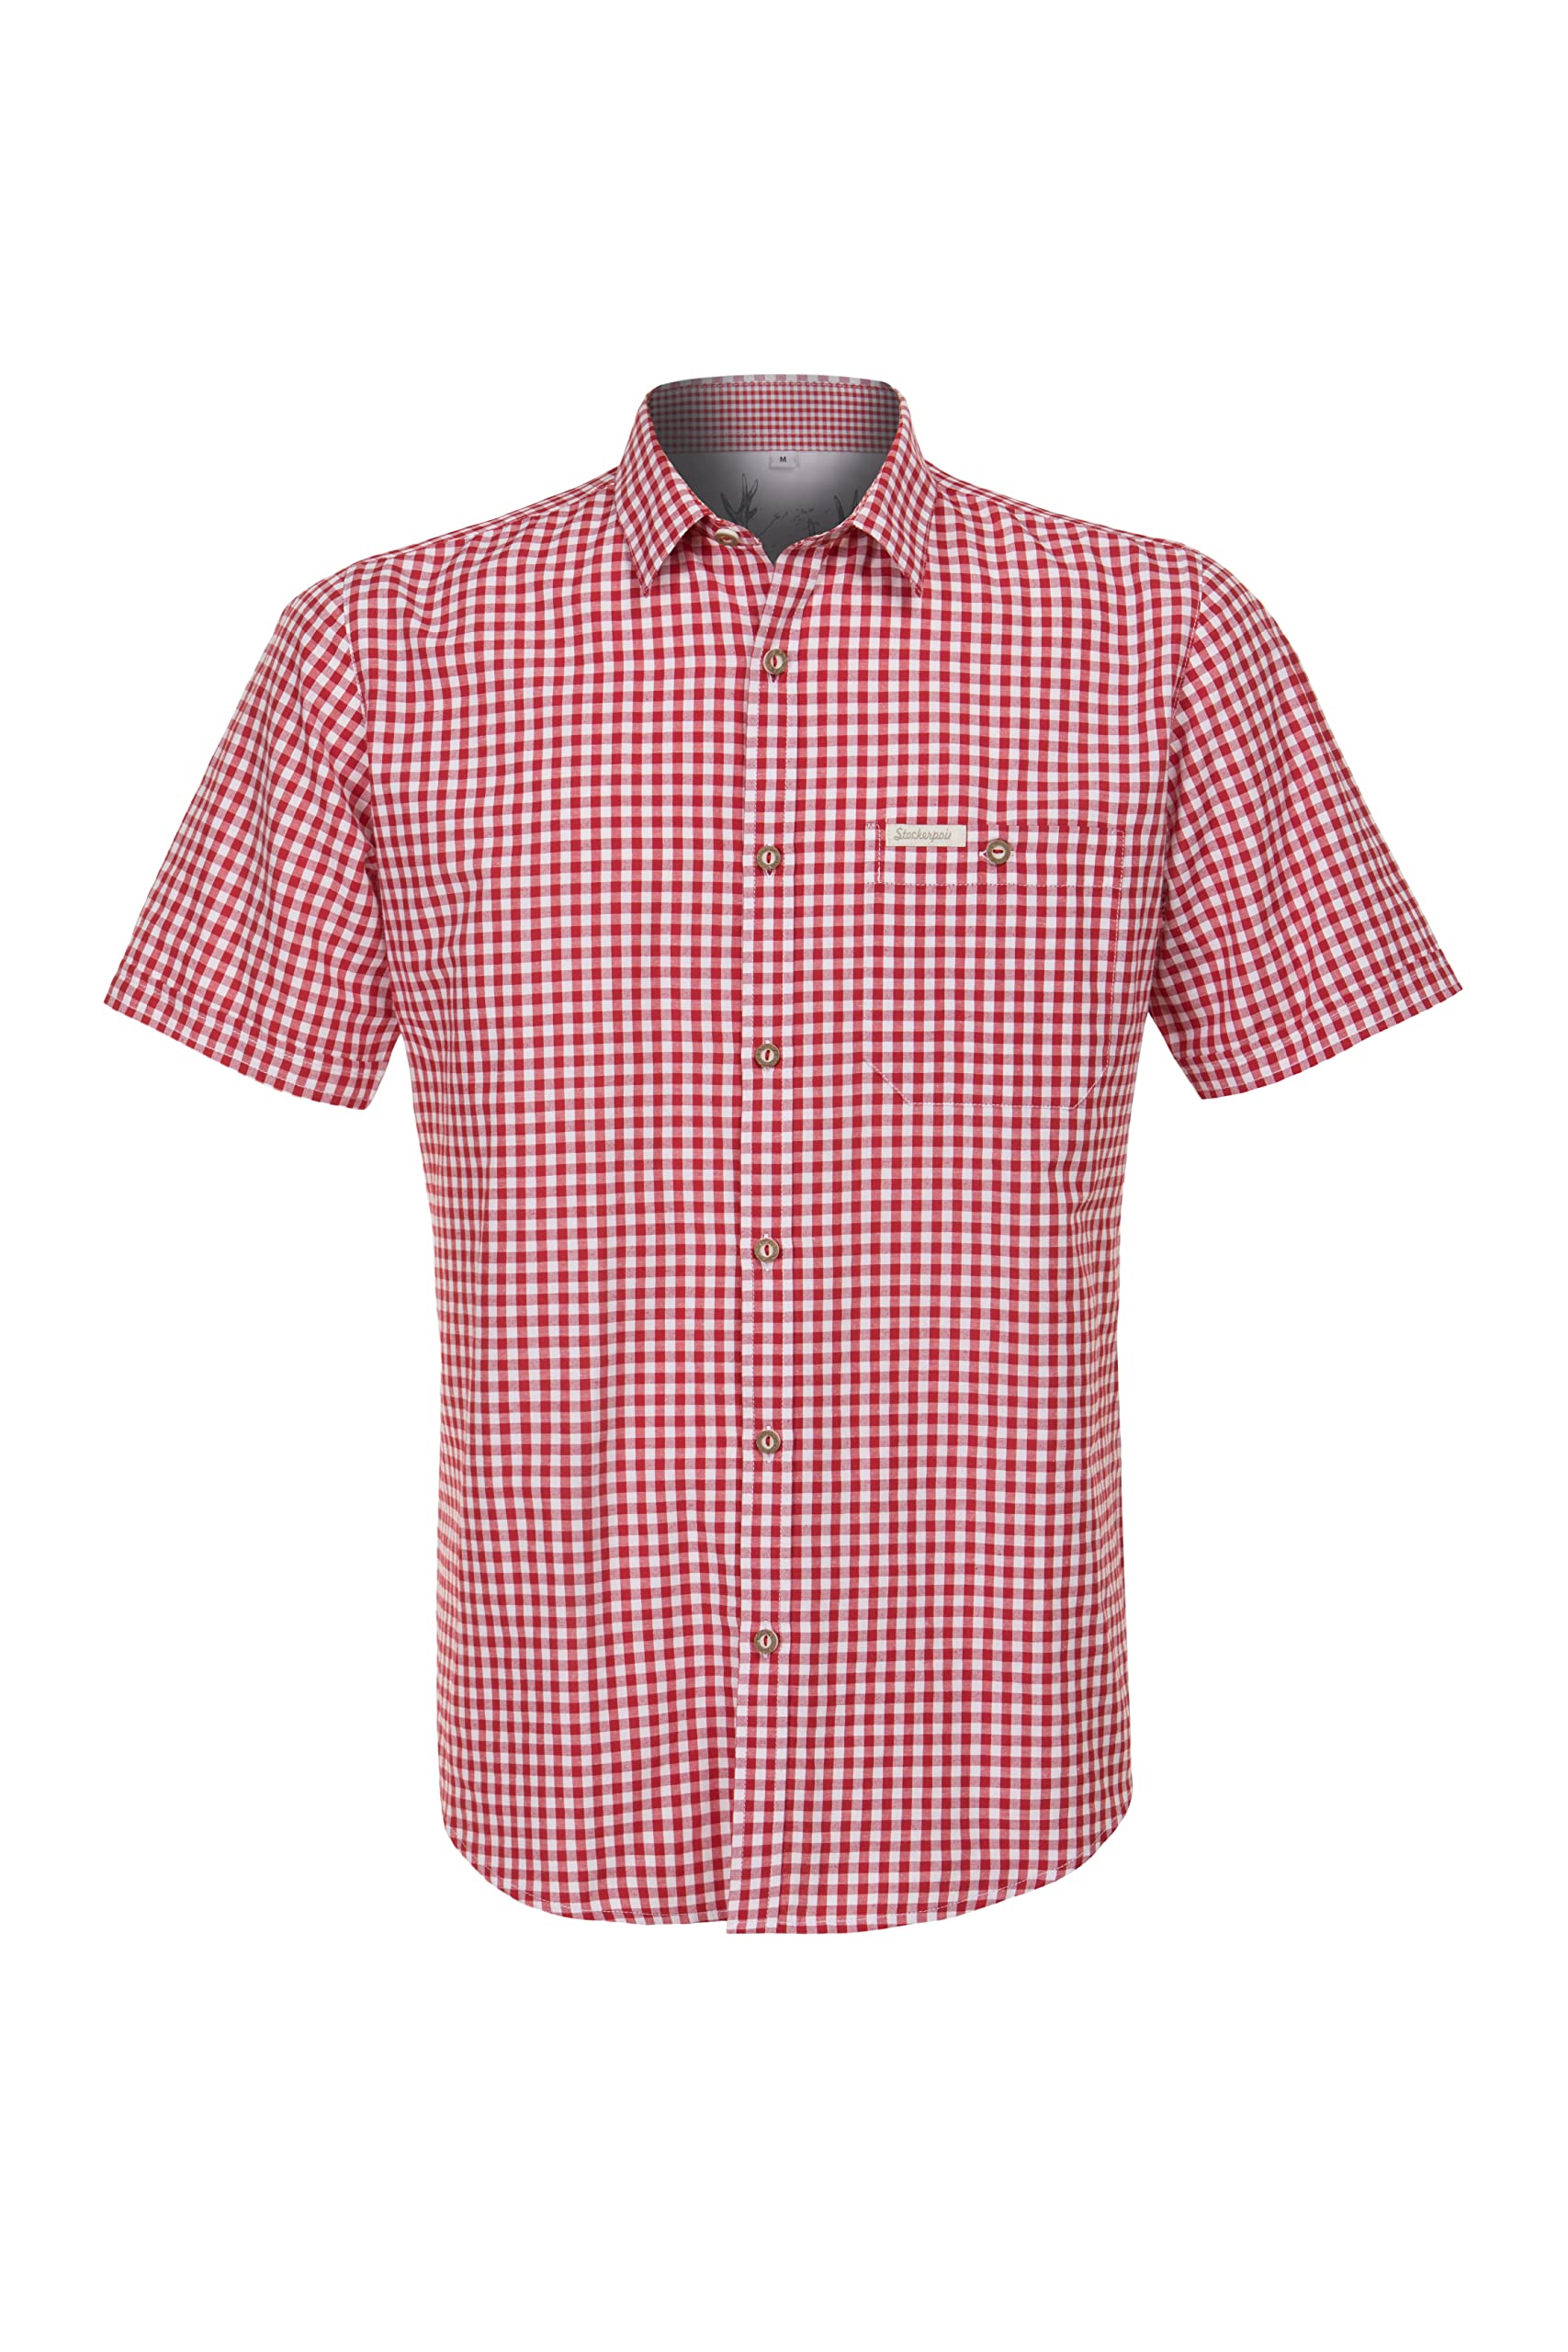 Stockerpoint Herren Hemd Renko3 Trachtenhemd, Rot (Rot Rot), XX-Large